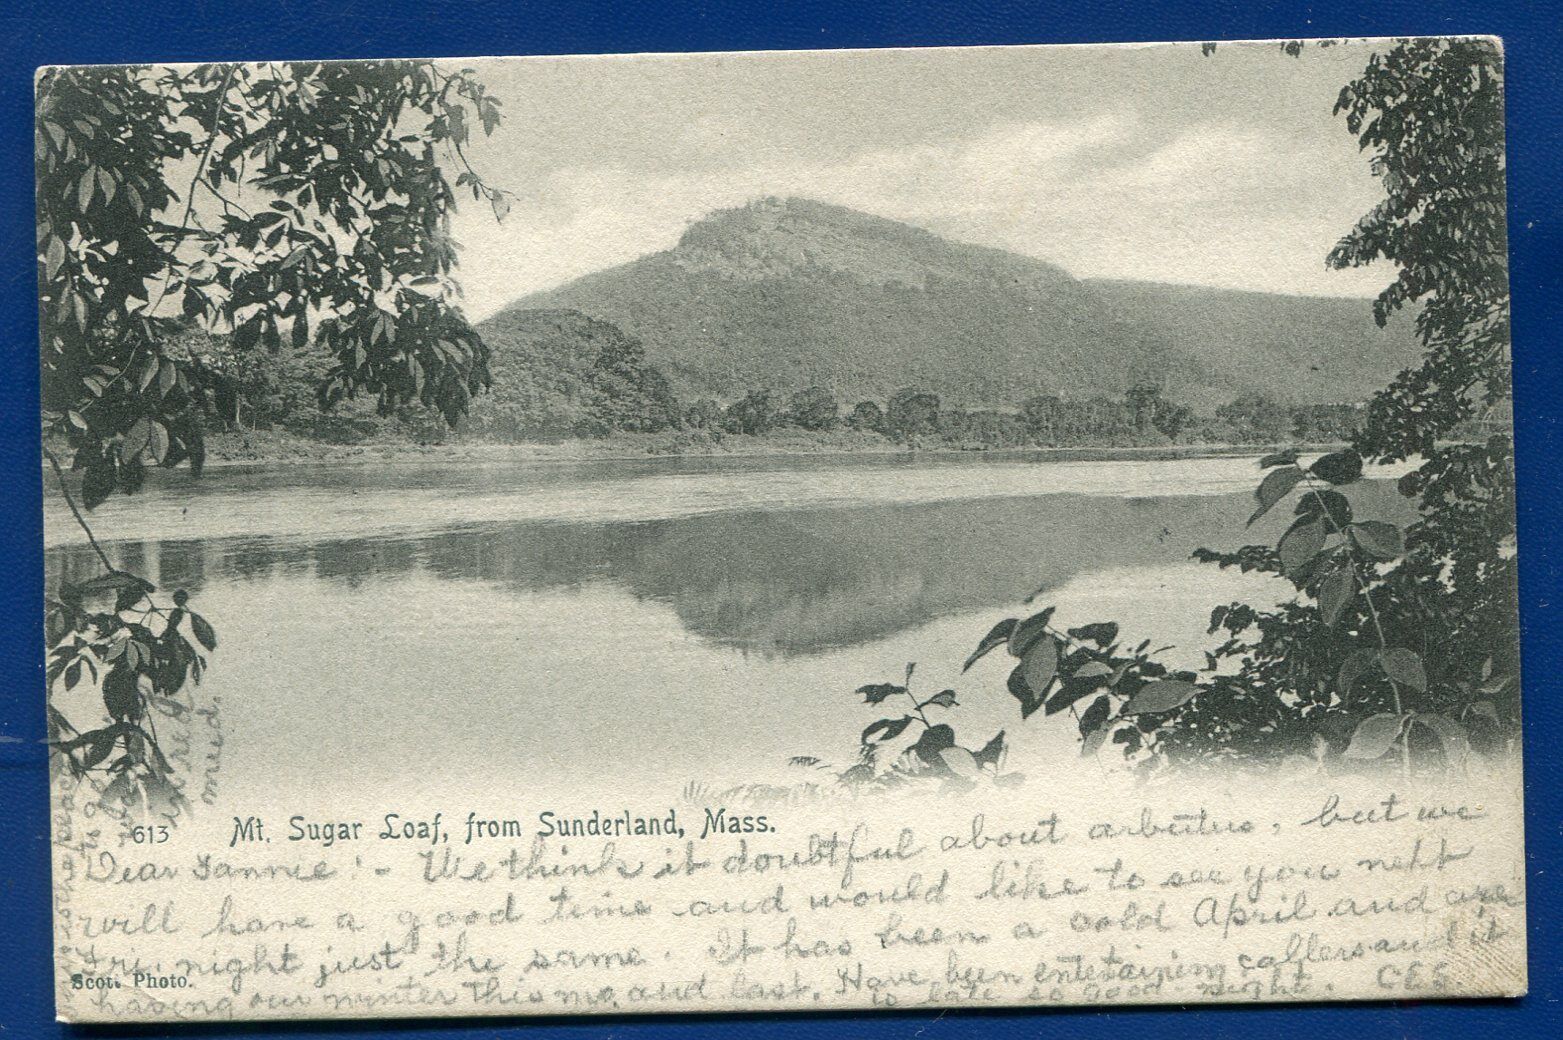 Mt Sugar Loaf from Sunderland Massachusetts mass ma postcard